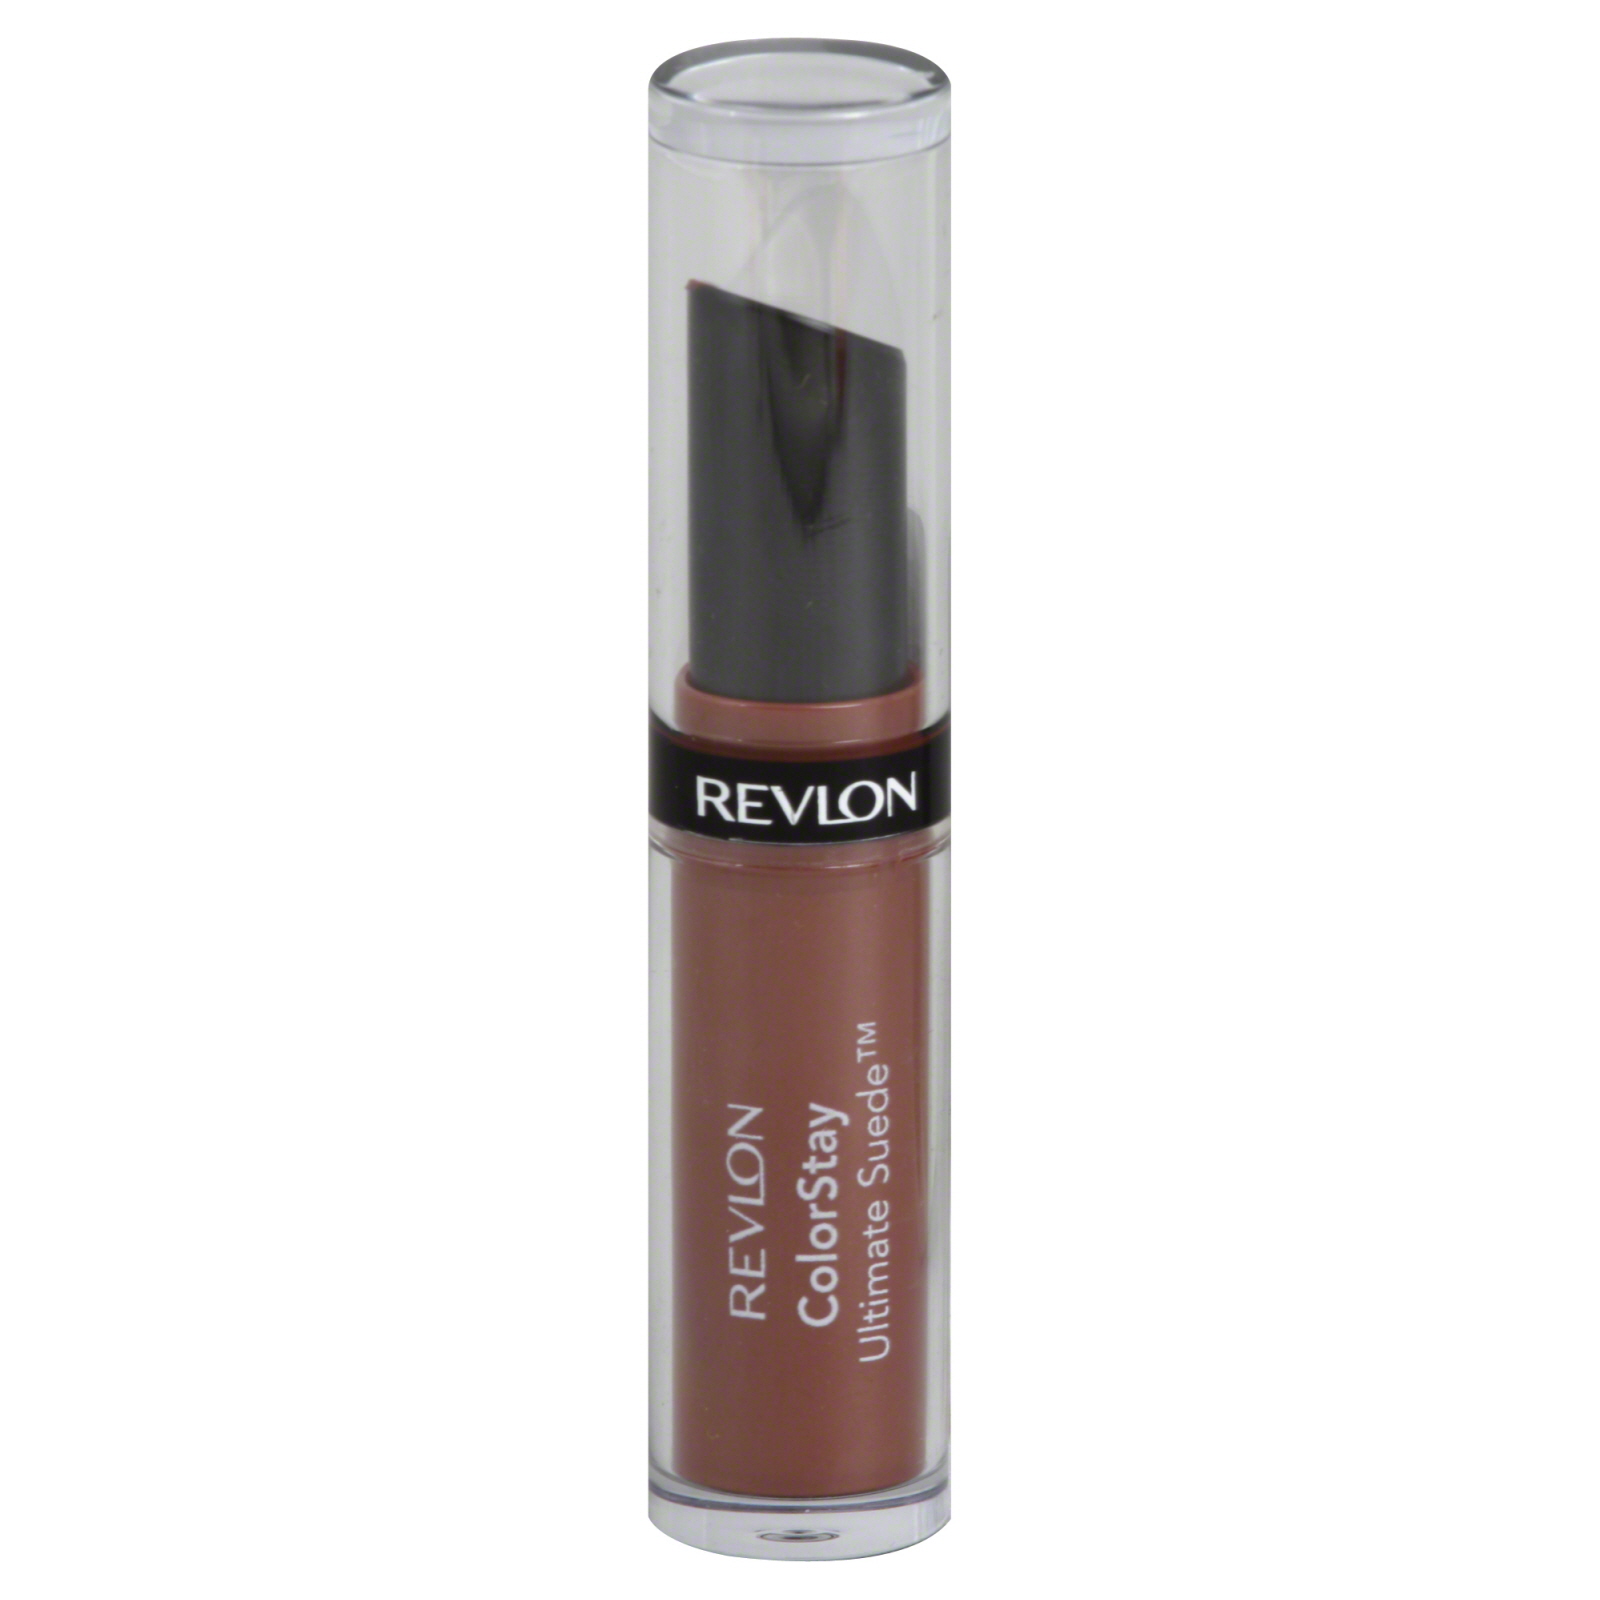 ColorStay Ultimate Suede Lipstick, Catwalk 065, 0.09 oz (255 g)